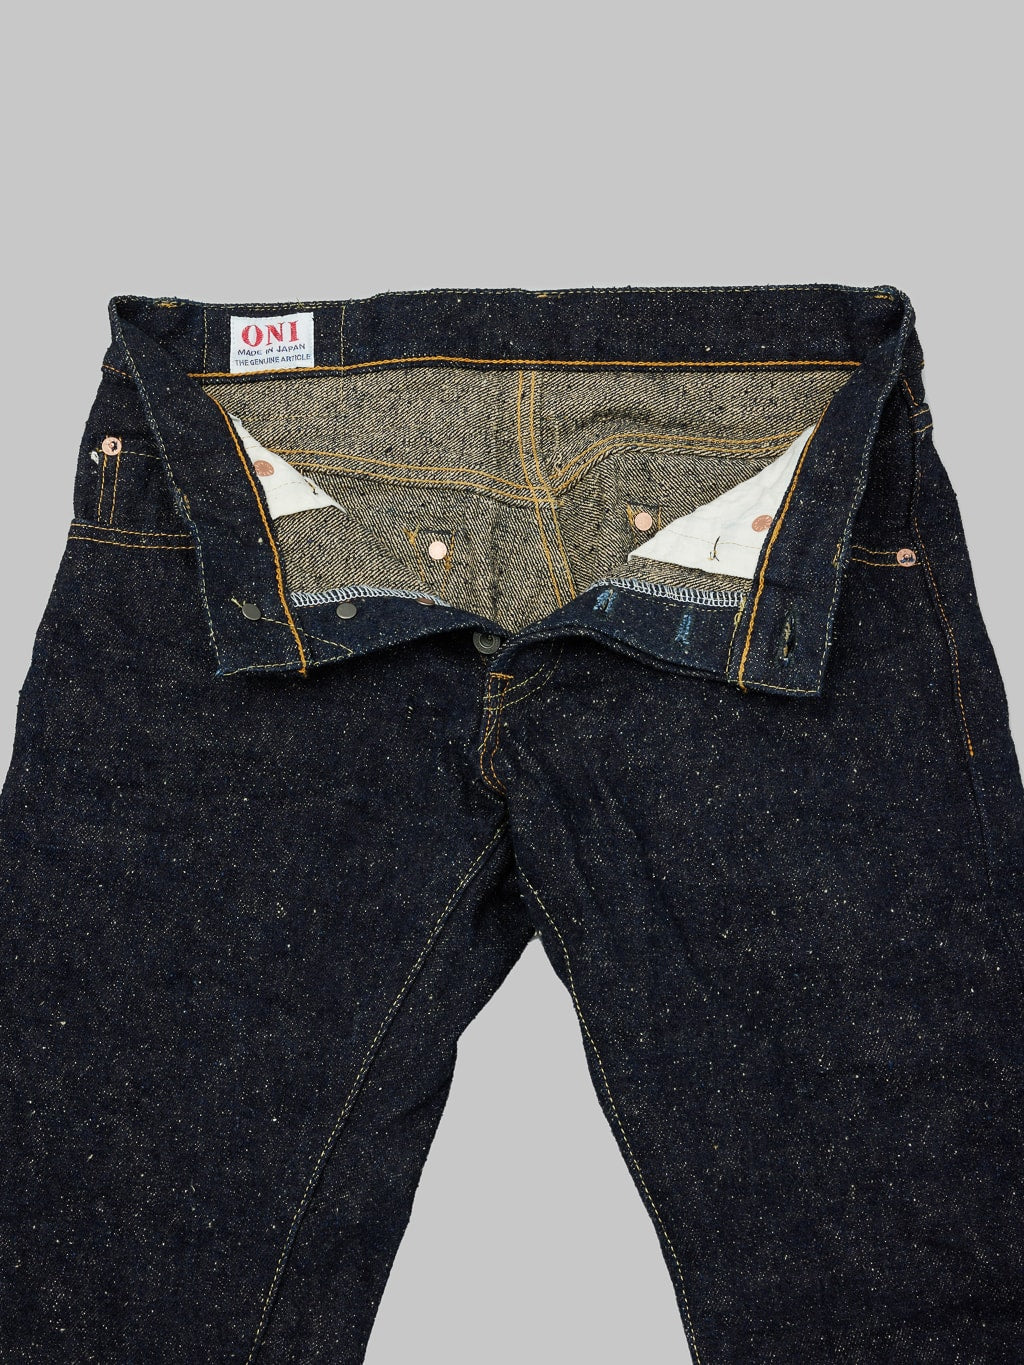 ONI Denim 544 Asphalt 20oz Stylish Tapered Jeans  interior fabric